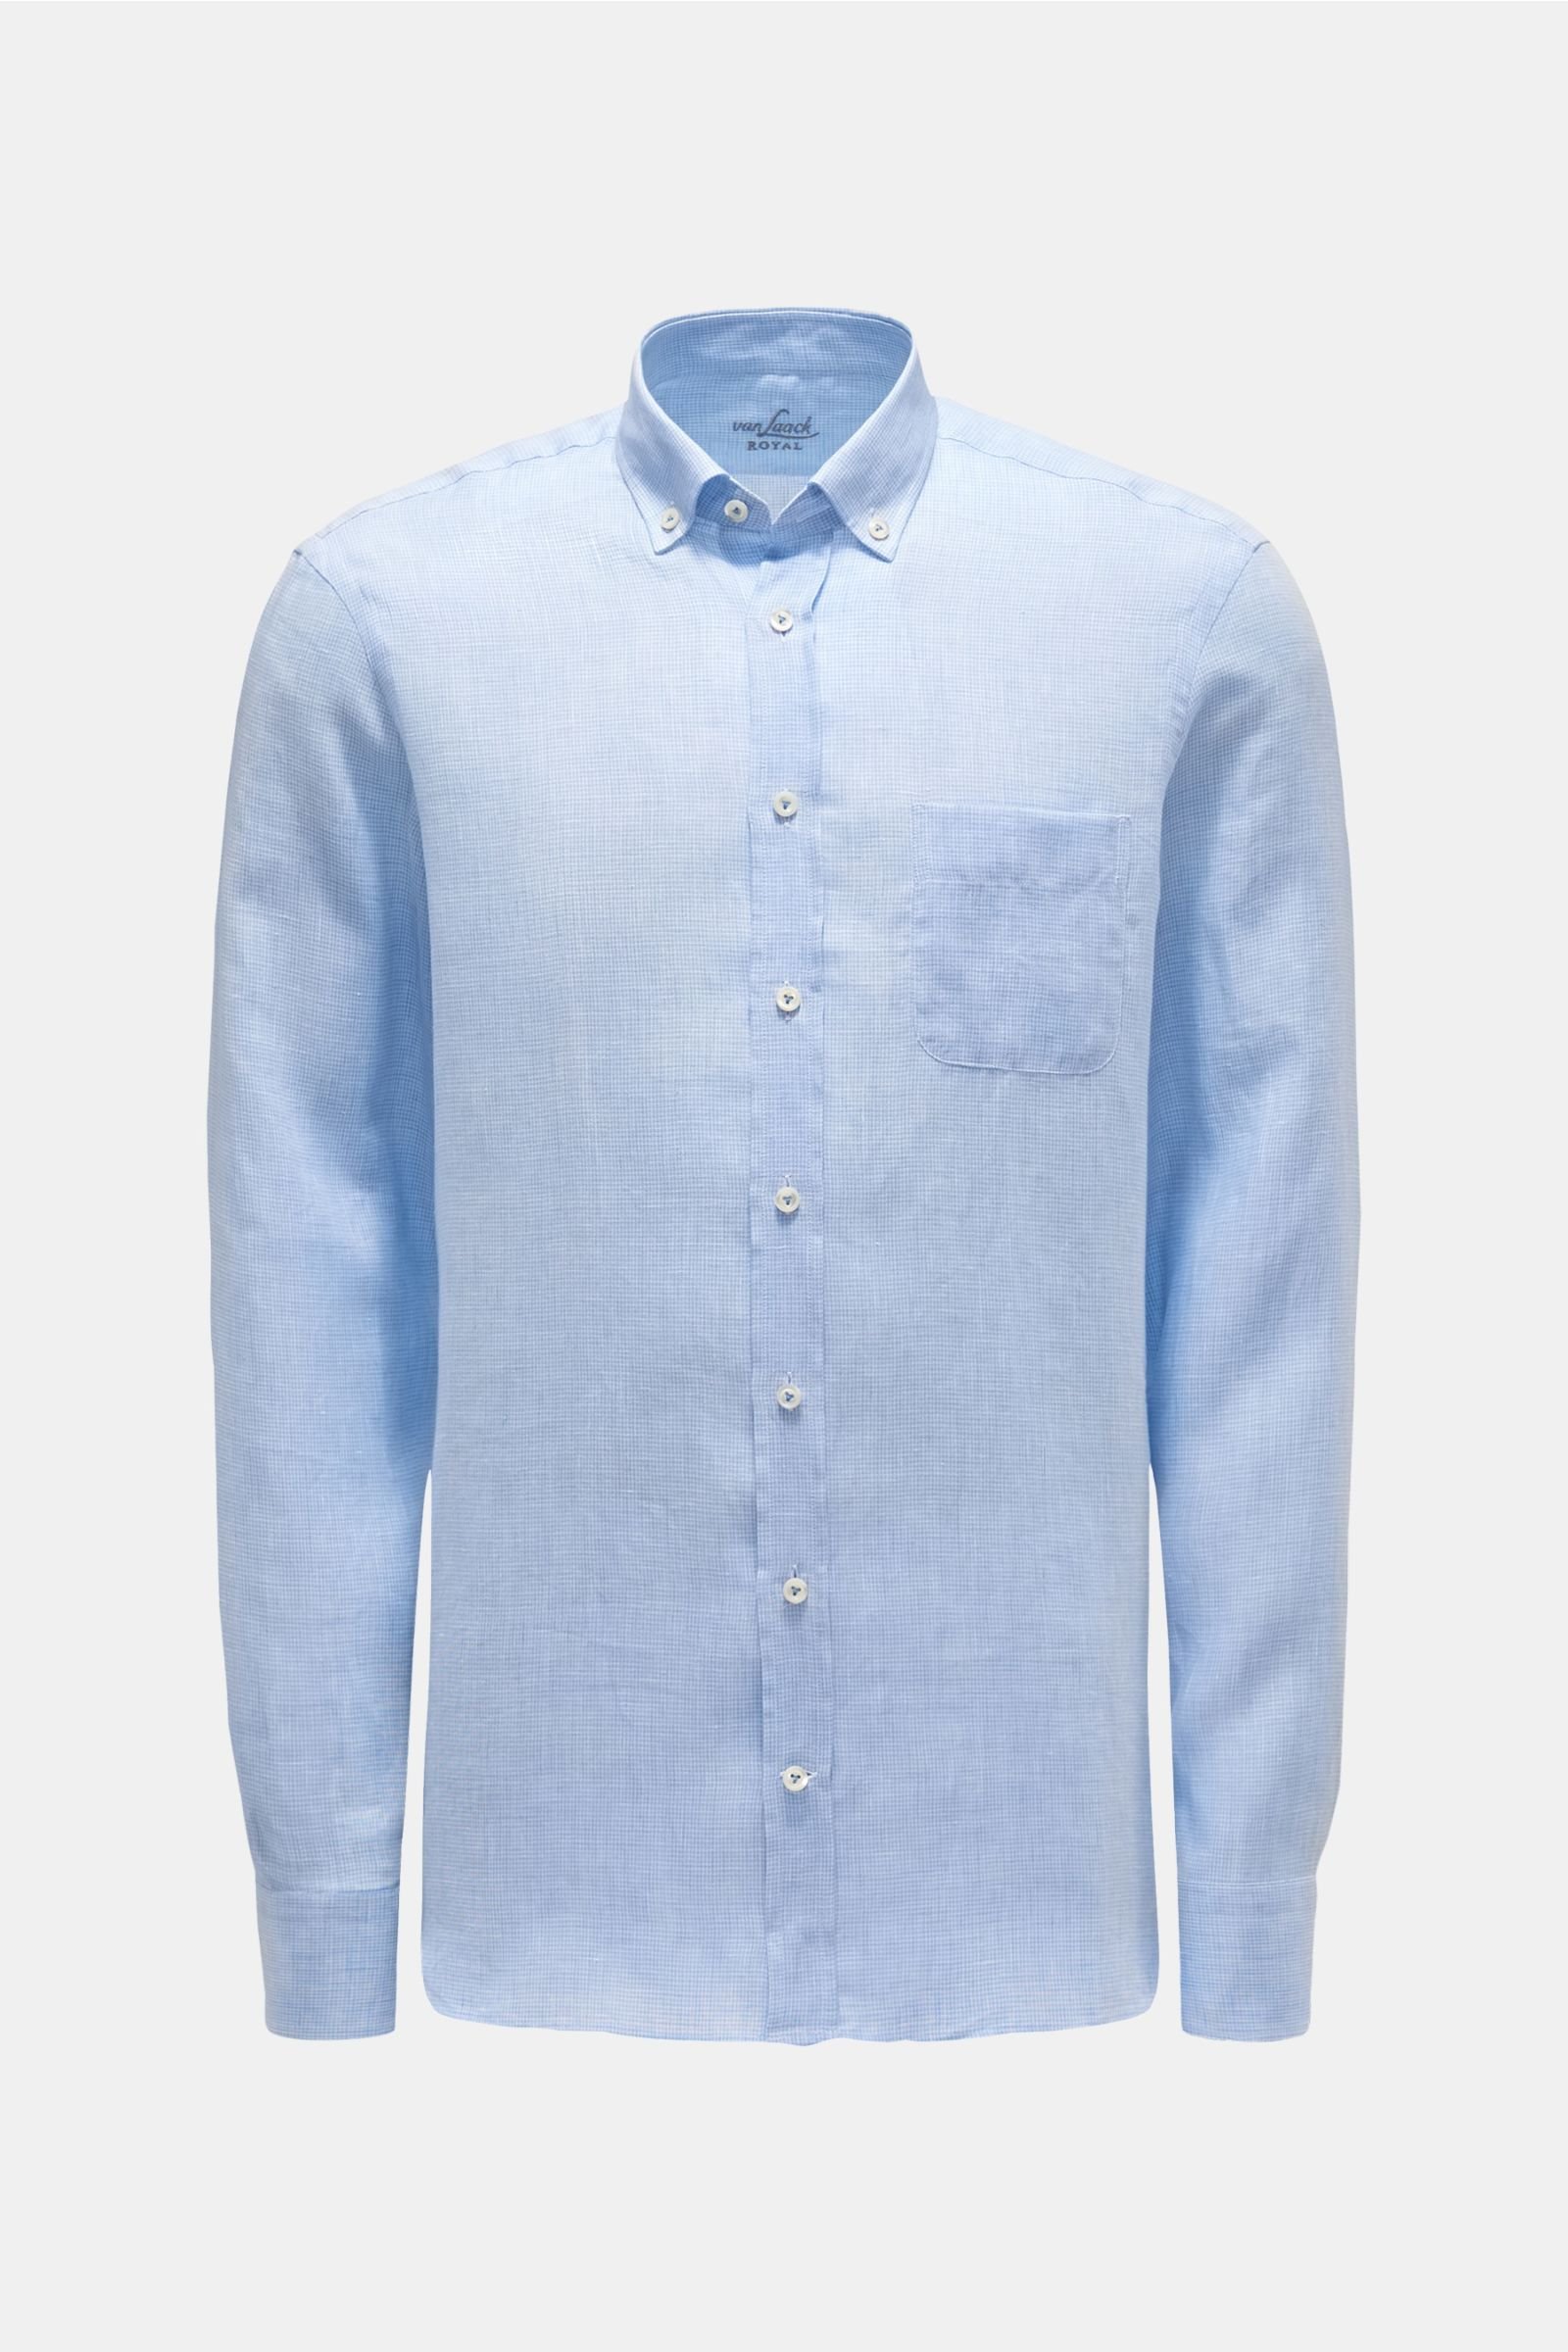 Linen shirt 'Roy-LTF' button-down collar light blue/white checked